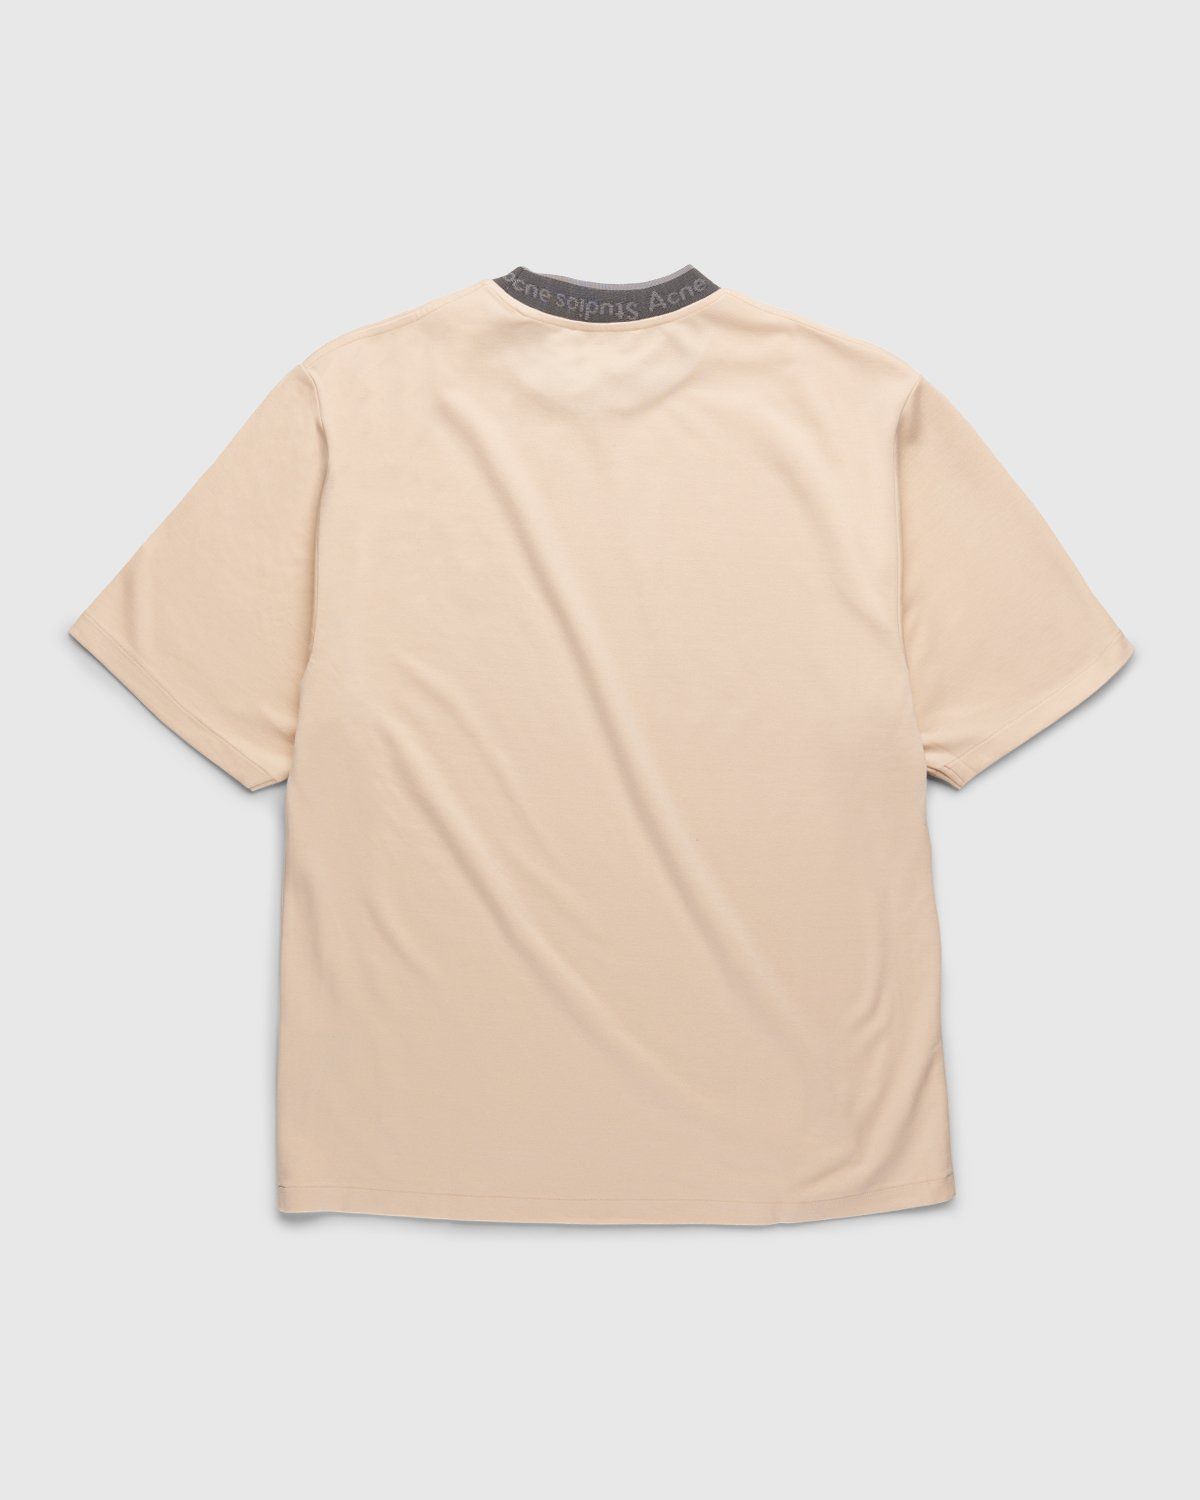 Acne Studios – Logo Collar T-Shirt Cream Beige - Tops - Beige - Image 2